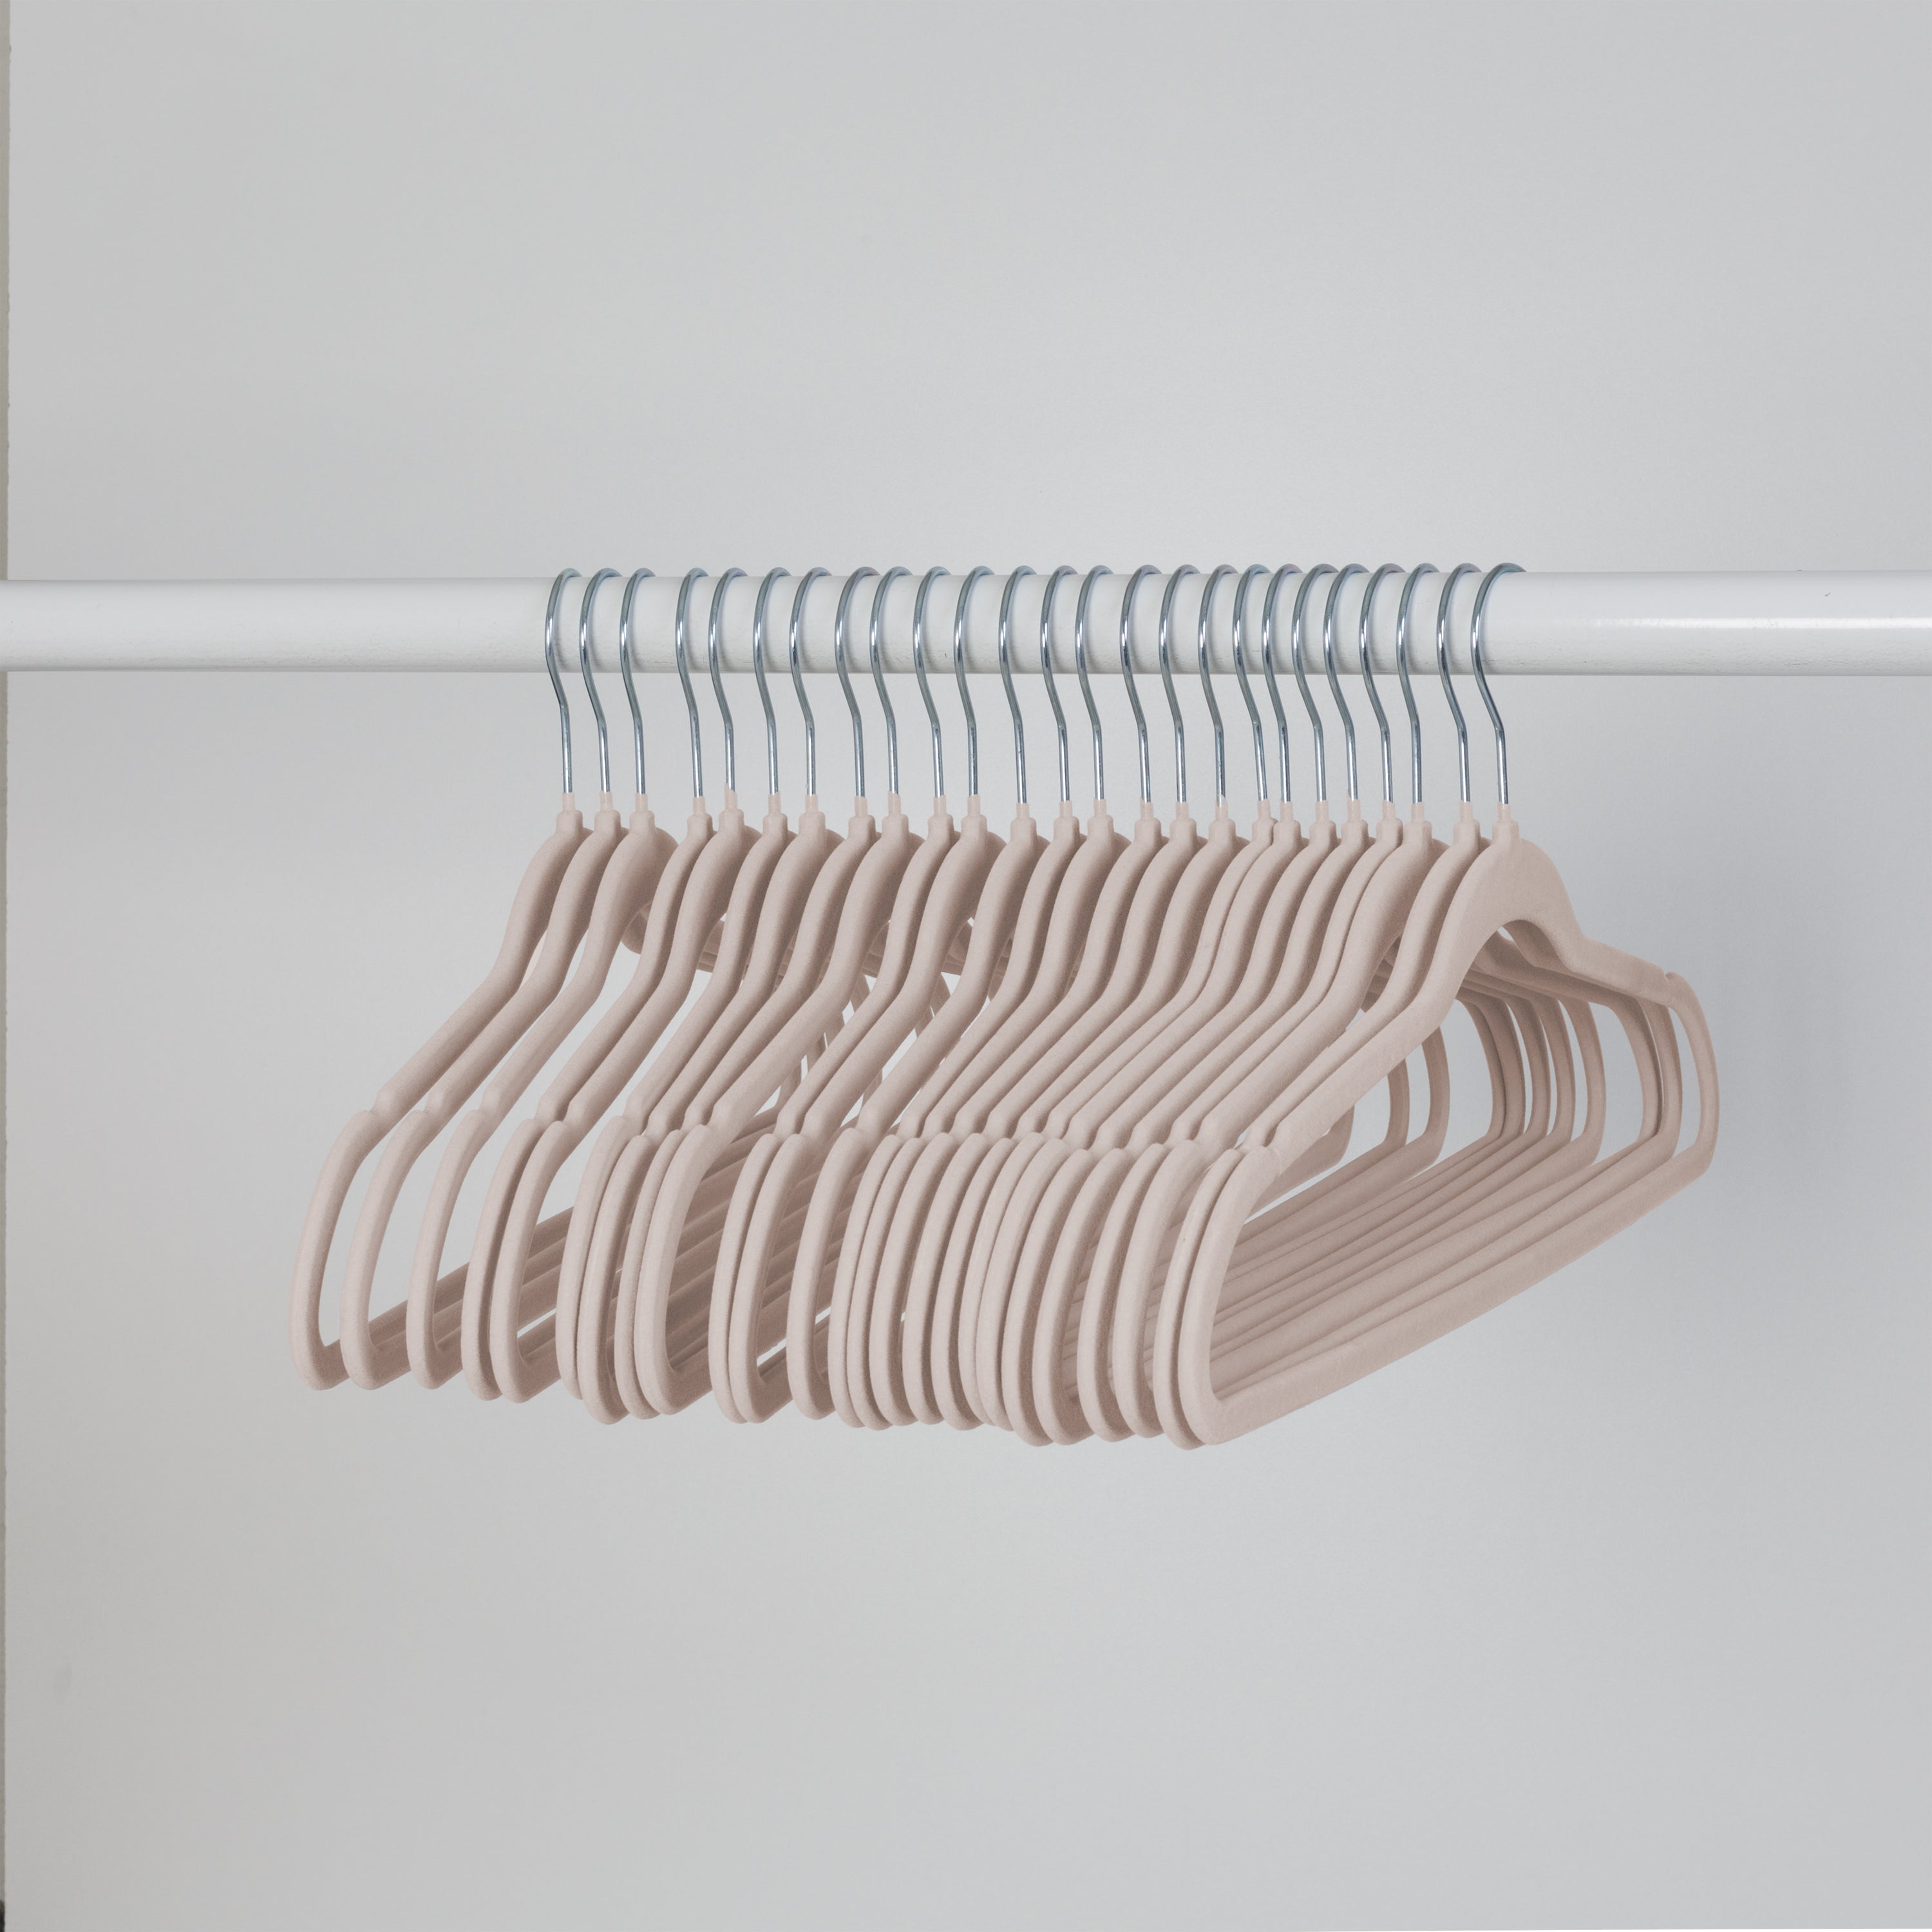 SONGMICS Velvet Pants Hangers with Clips, Gray / 30